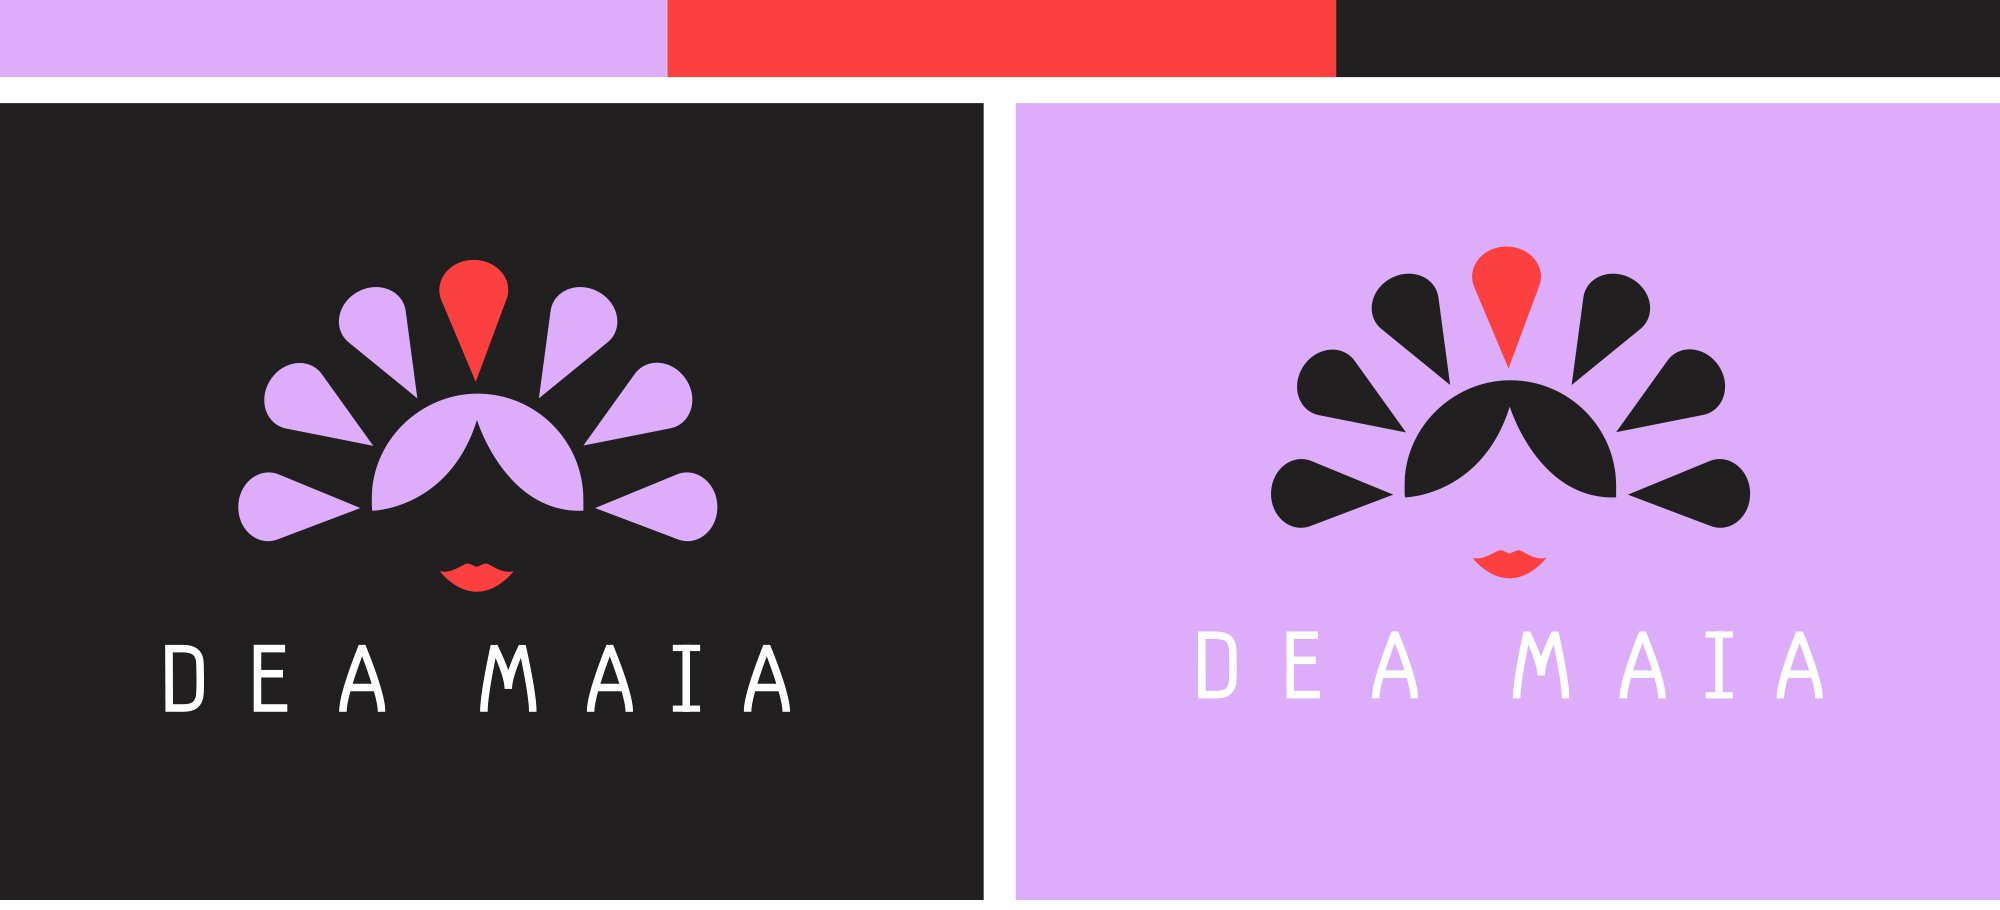 Dea Maia branded logo color options